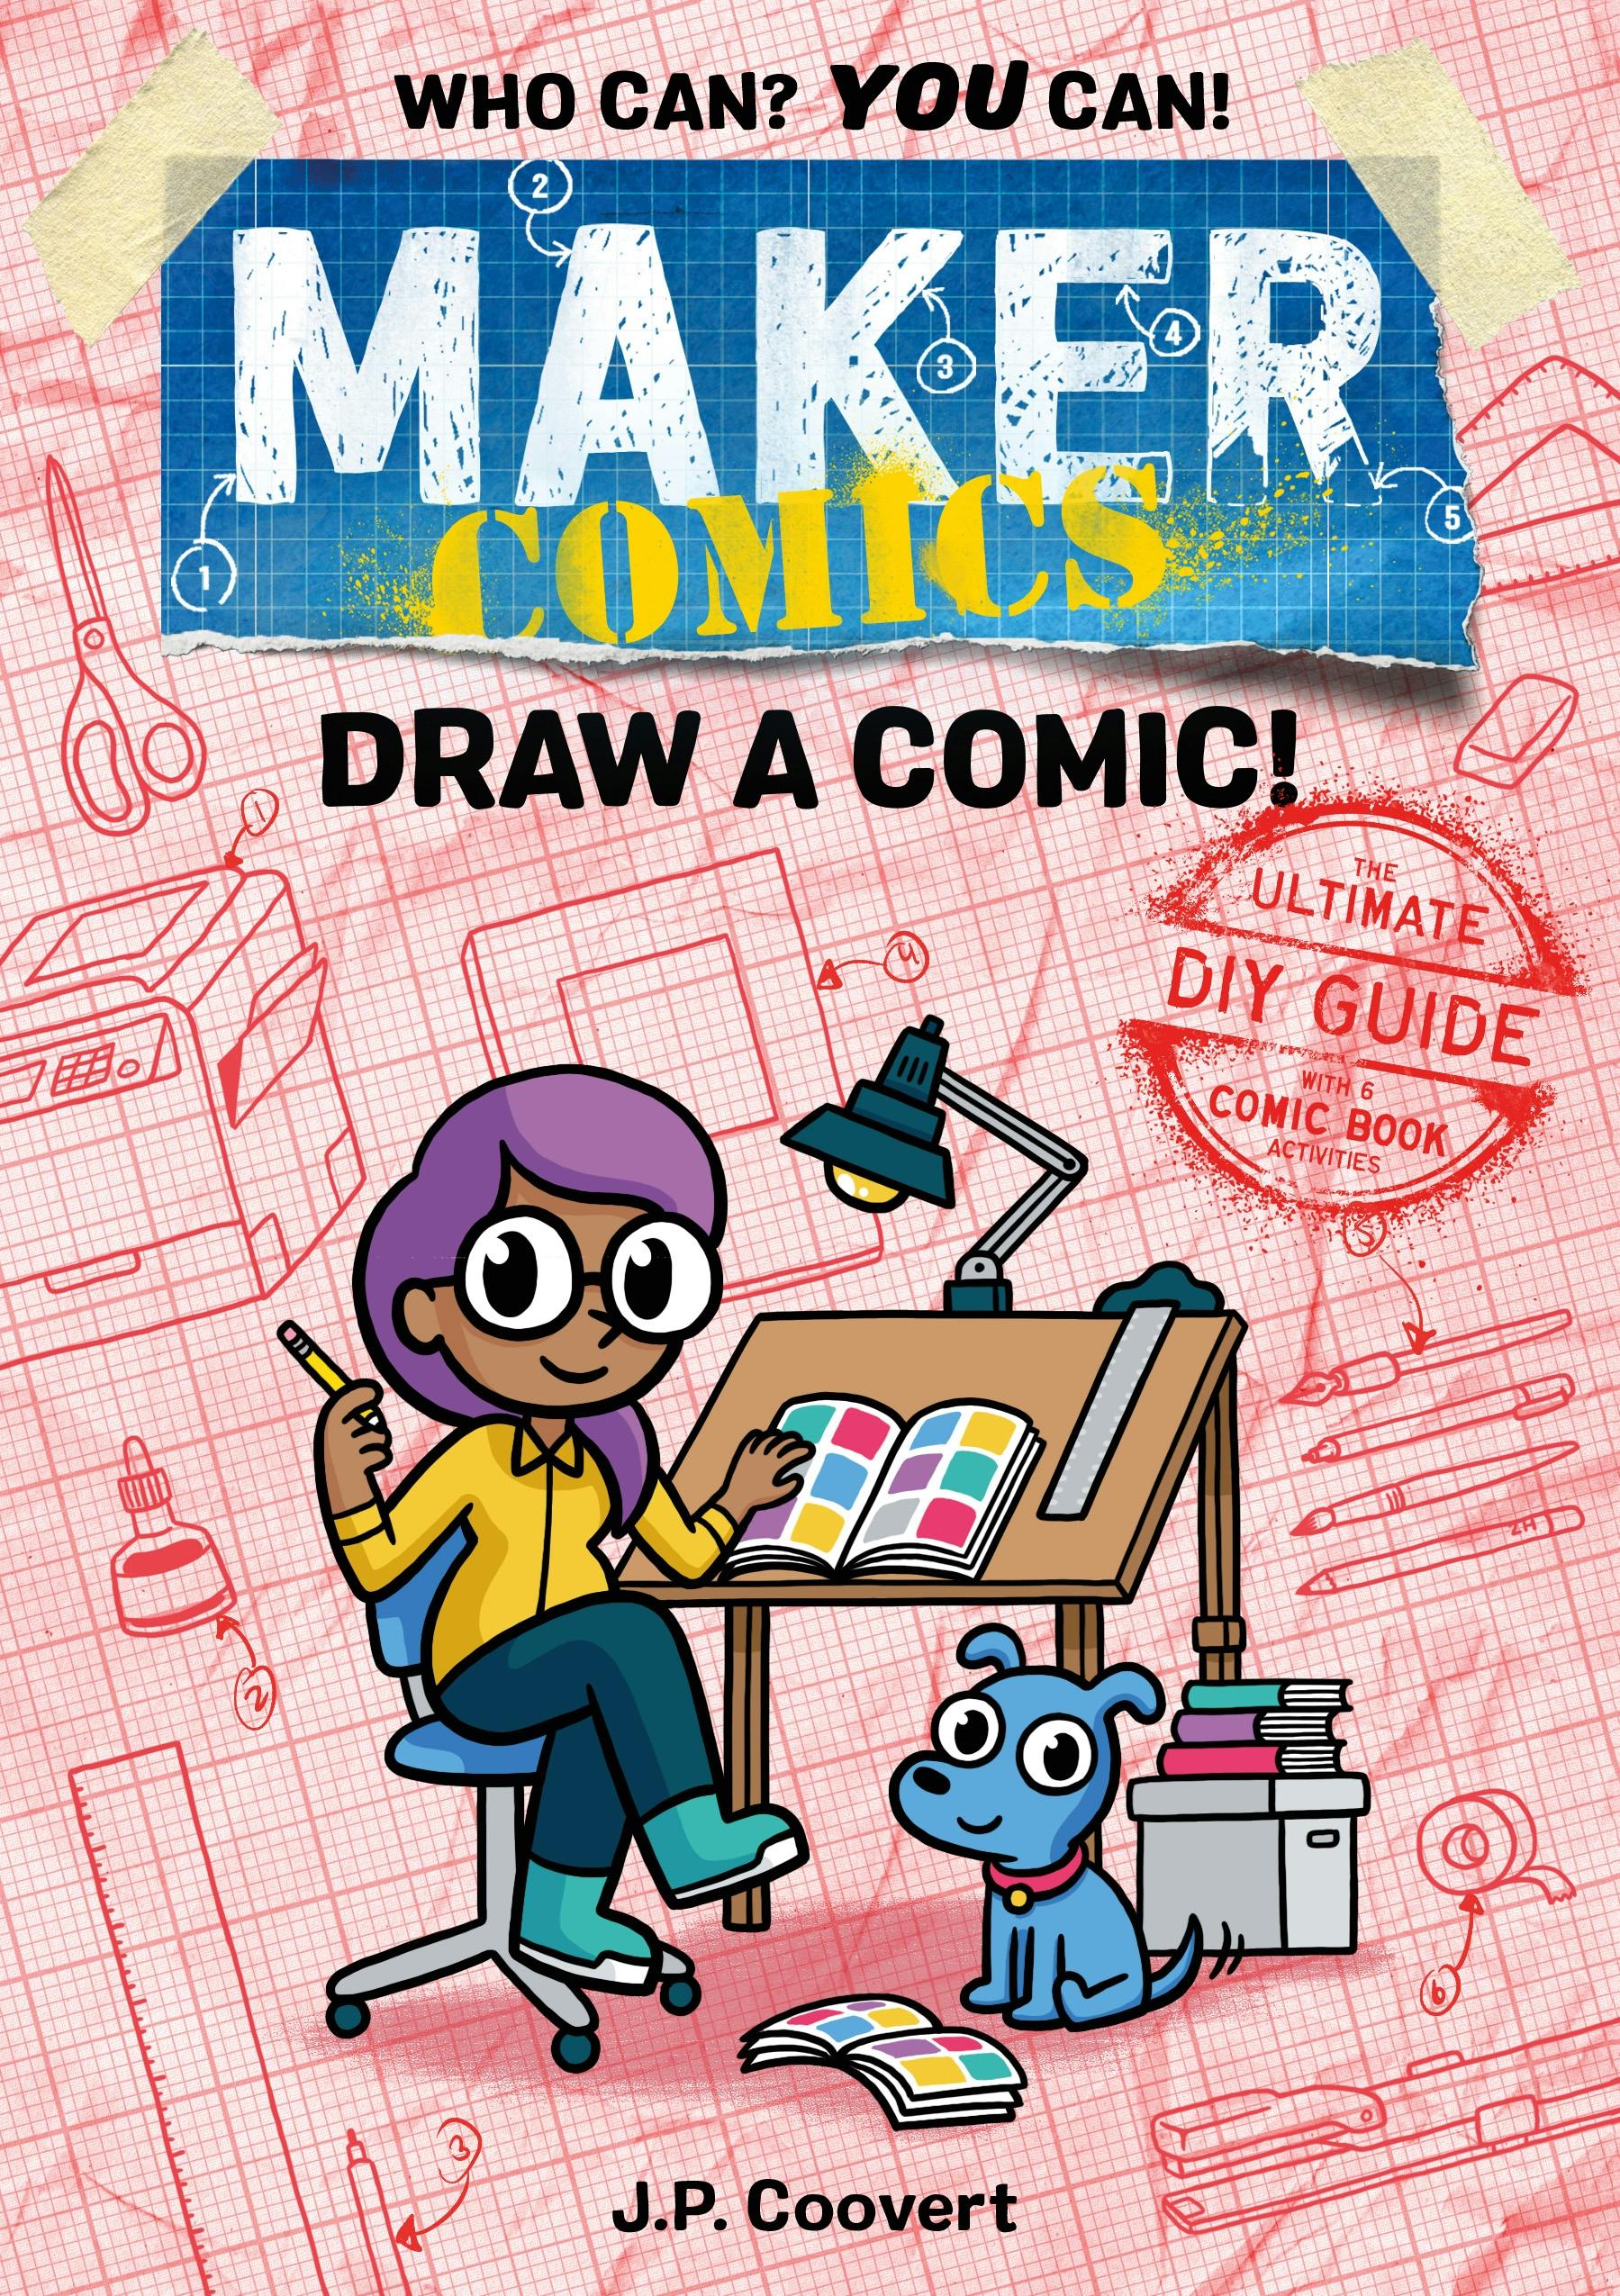 Free Comic Strip Maker - Create Comic Strips Online | Canva